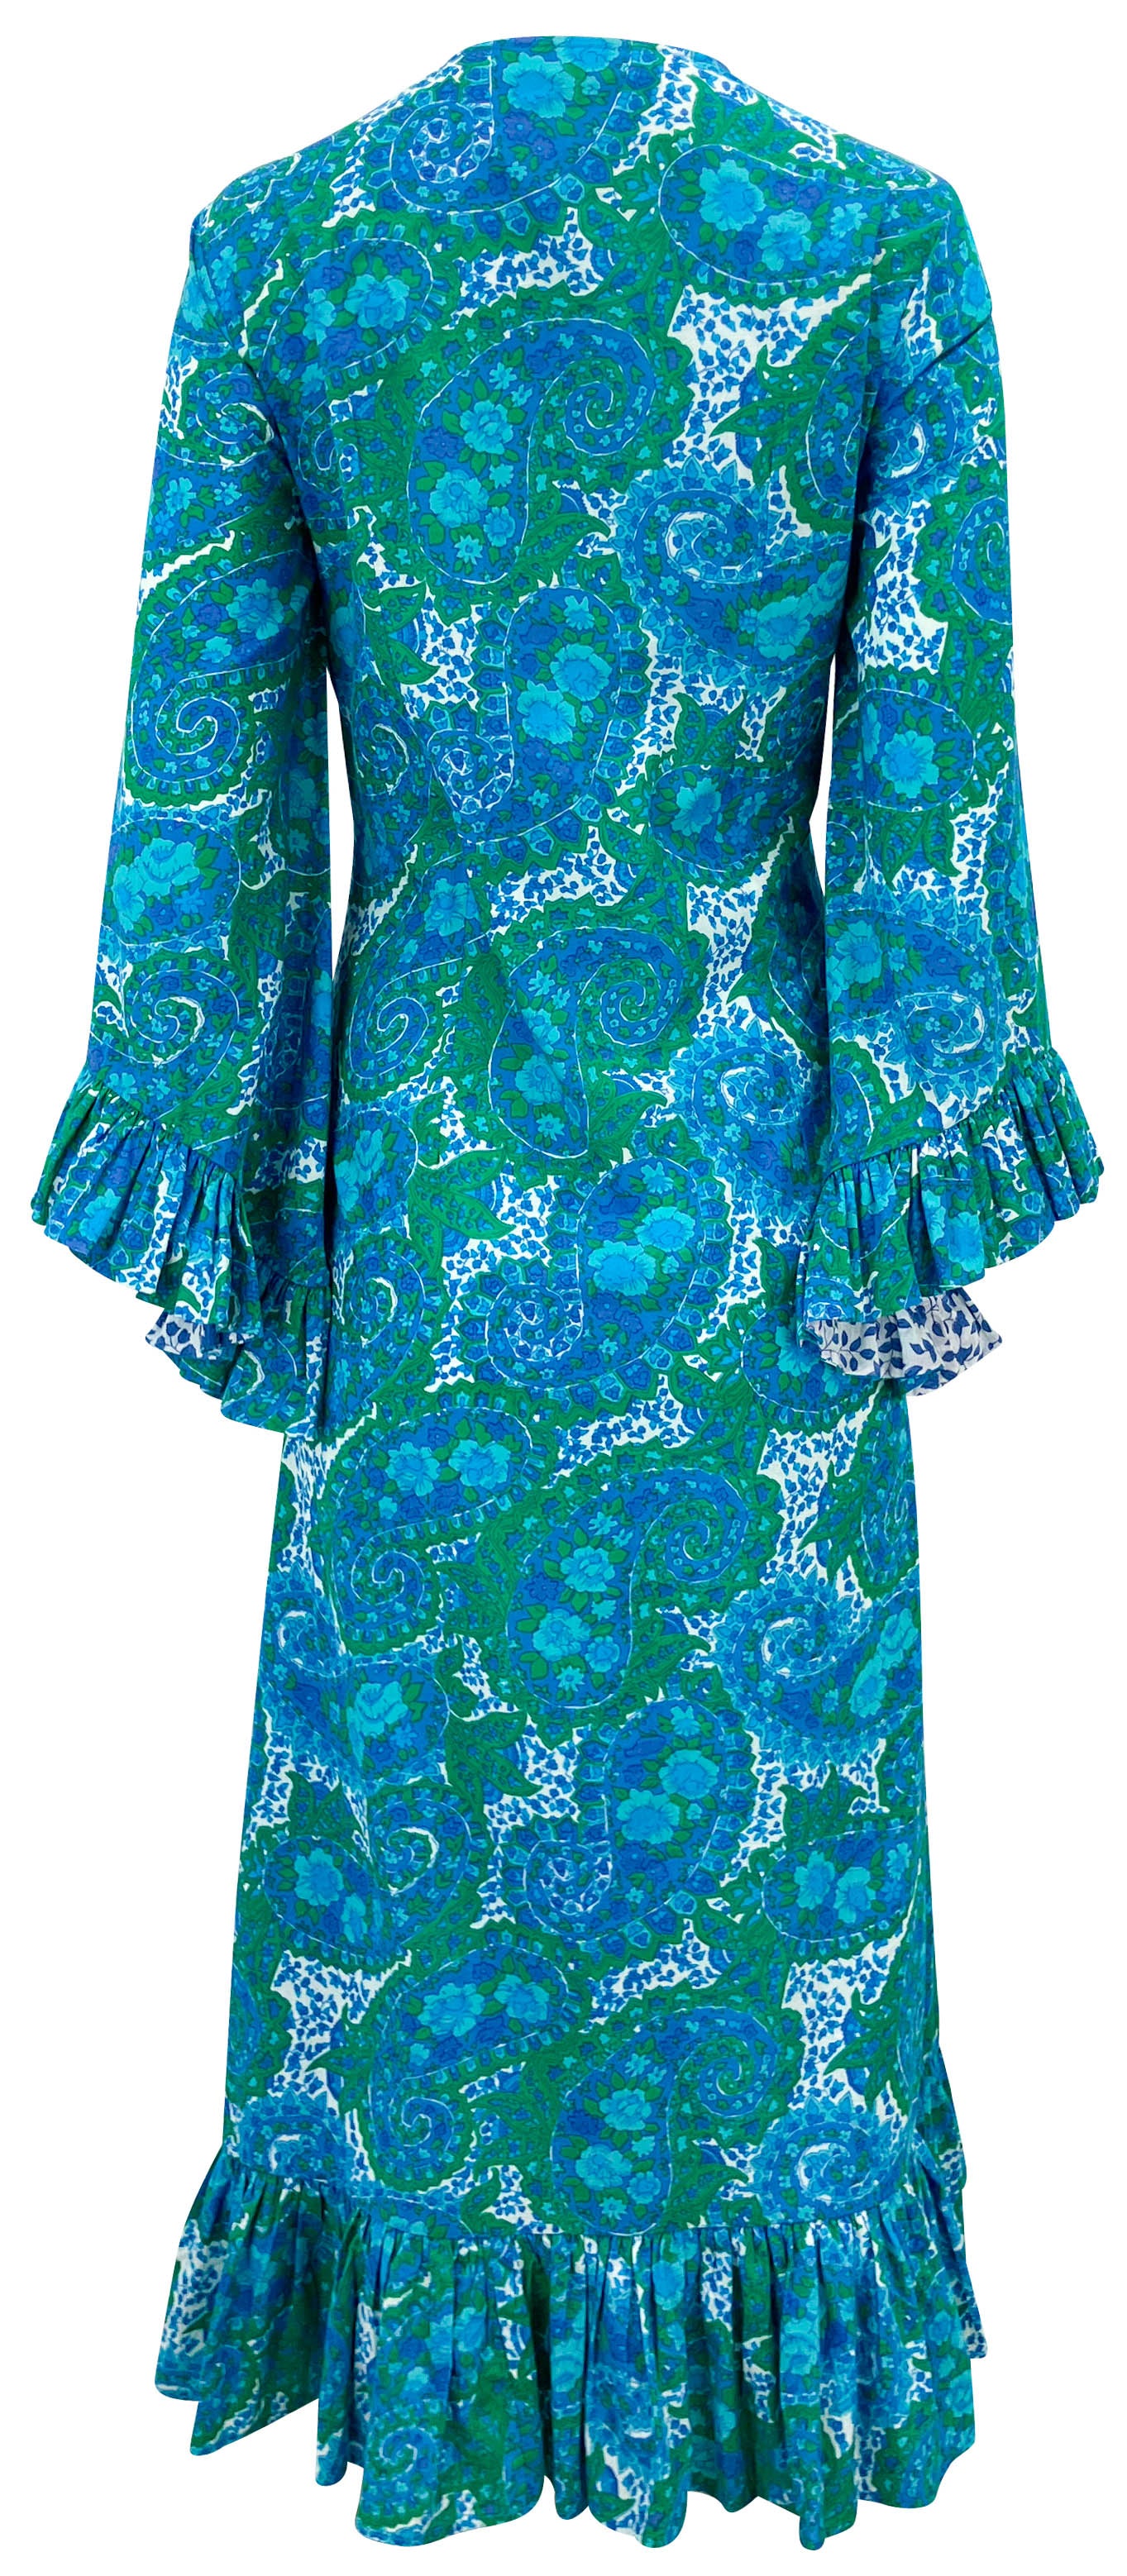 Alix of Bohemia Zelda Pool Paisley Dress in Blue Multi - Discounts on Alix of Bohemia at UAL